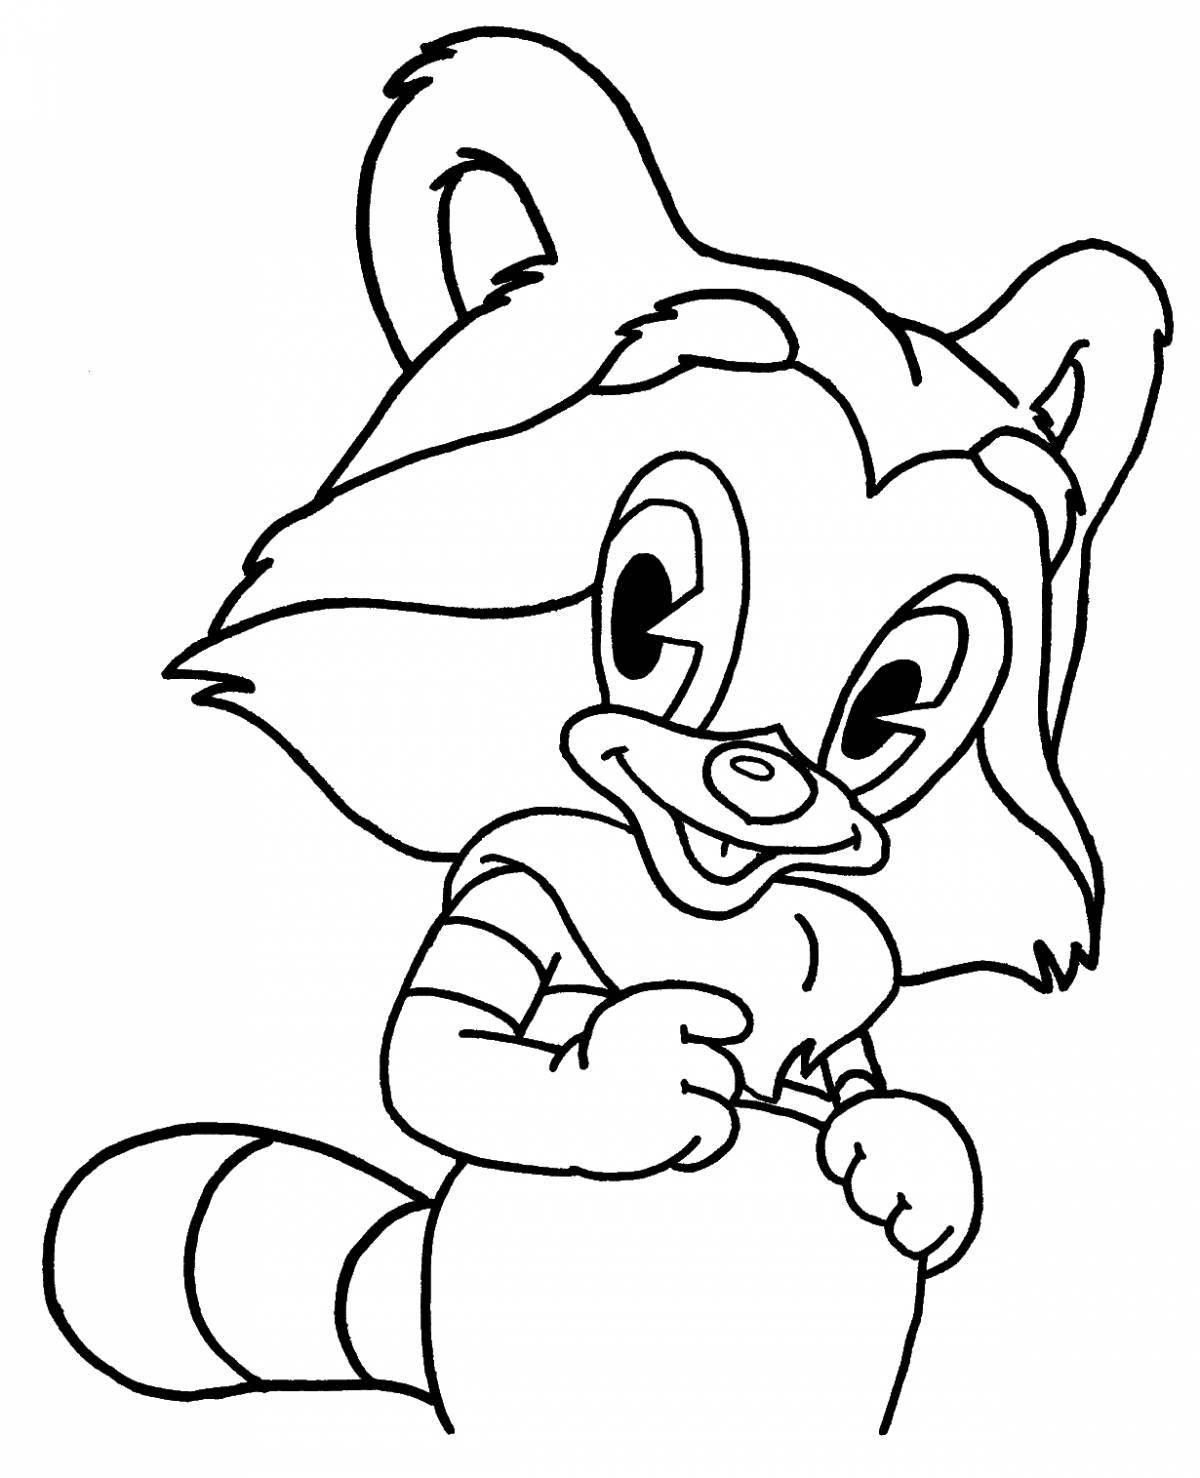 Naughty coloring book for kids cartoon raccoon